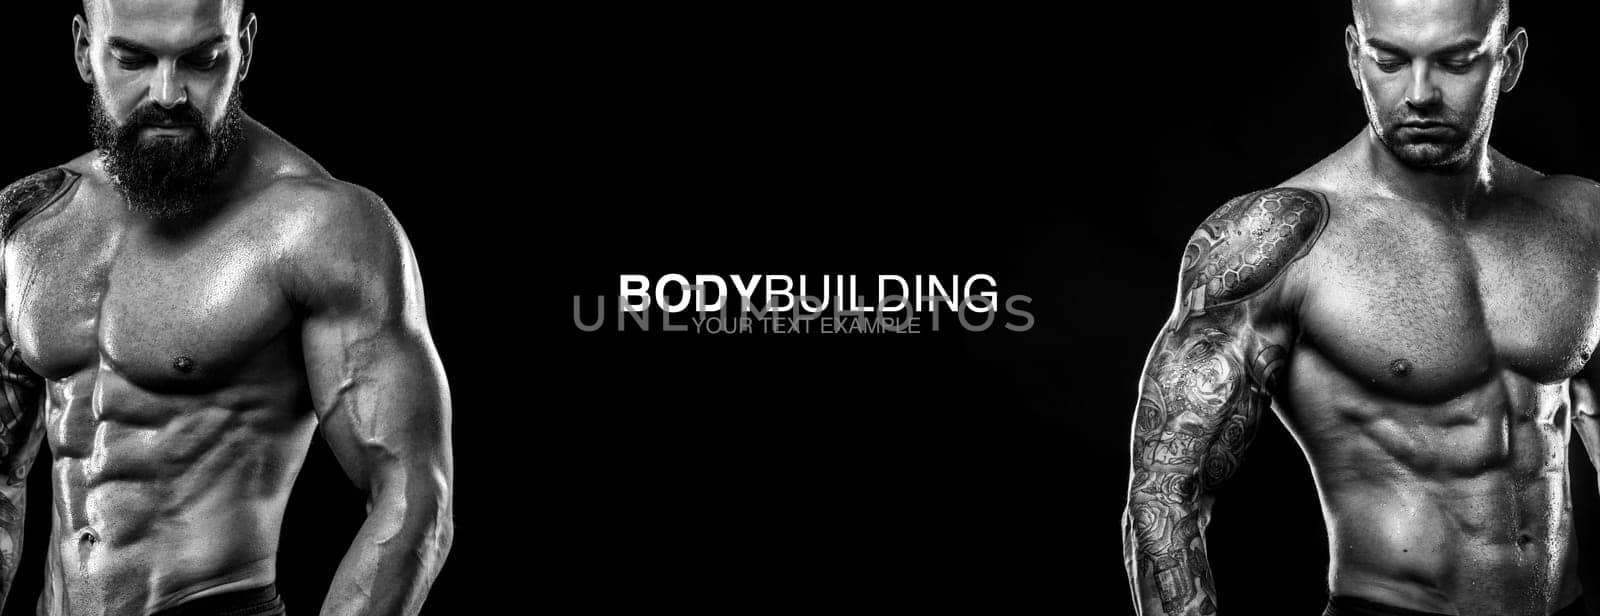 Sports wallpaper. Power athletic guy bodybuilder. Sportsman bodybuilder on black background with copy space. Sport concept.